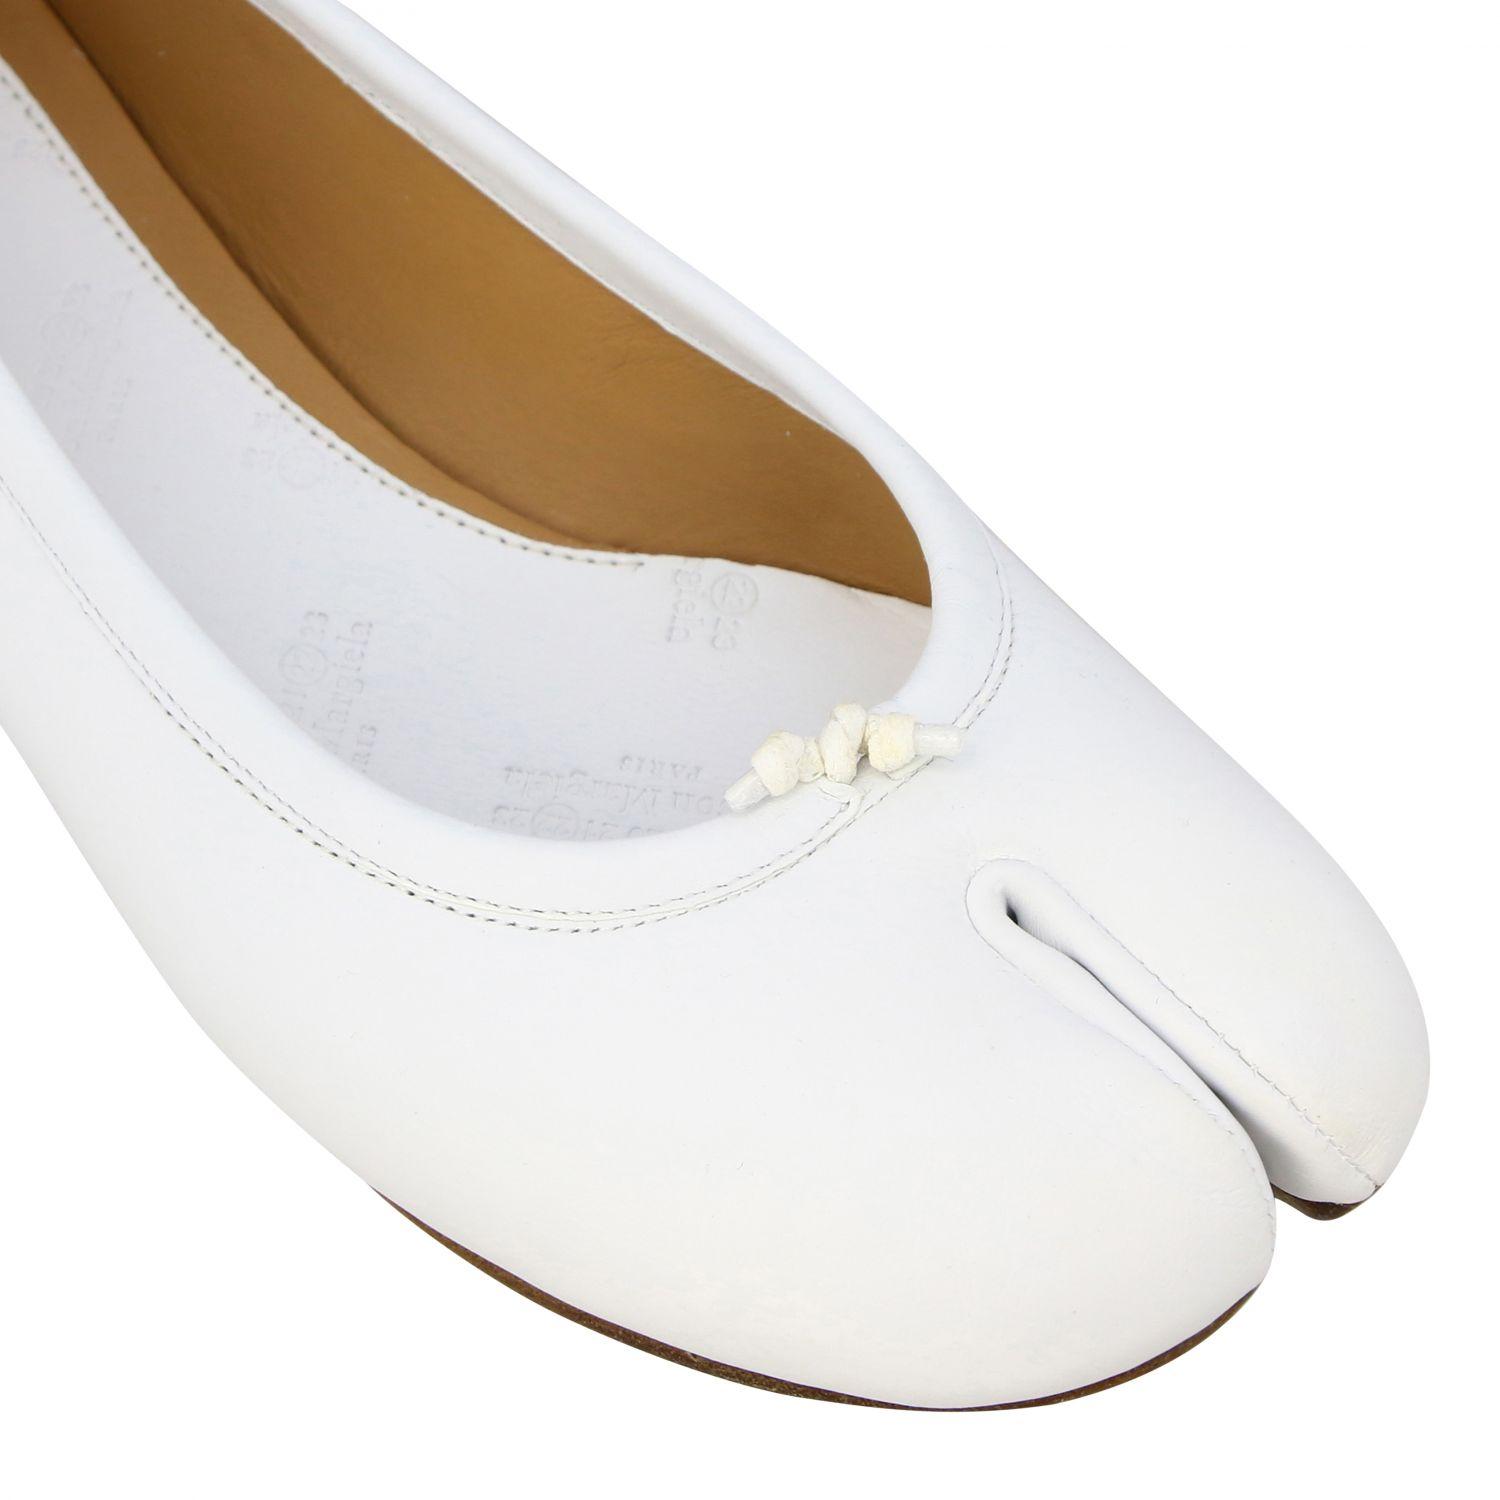 Maison Margiela Leather Tabi Ballet Flat in White - Save 68% - Lyst